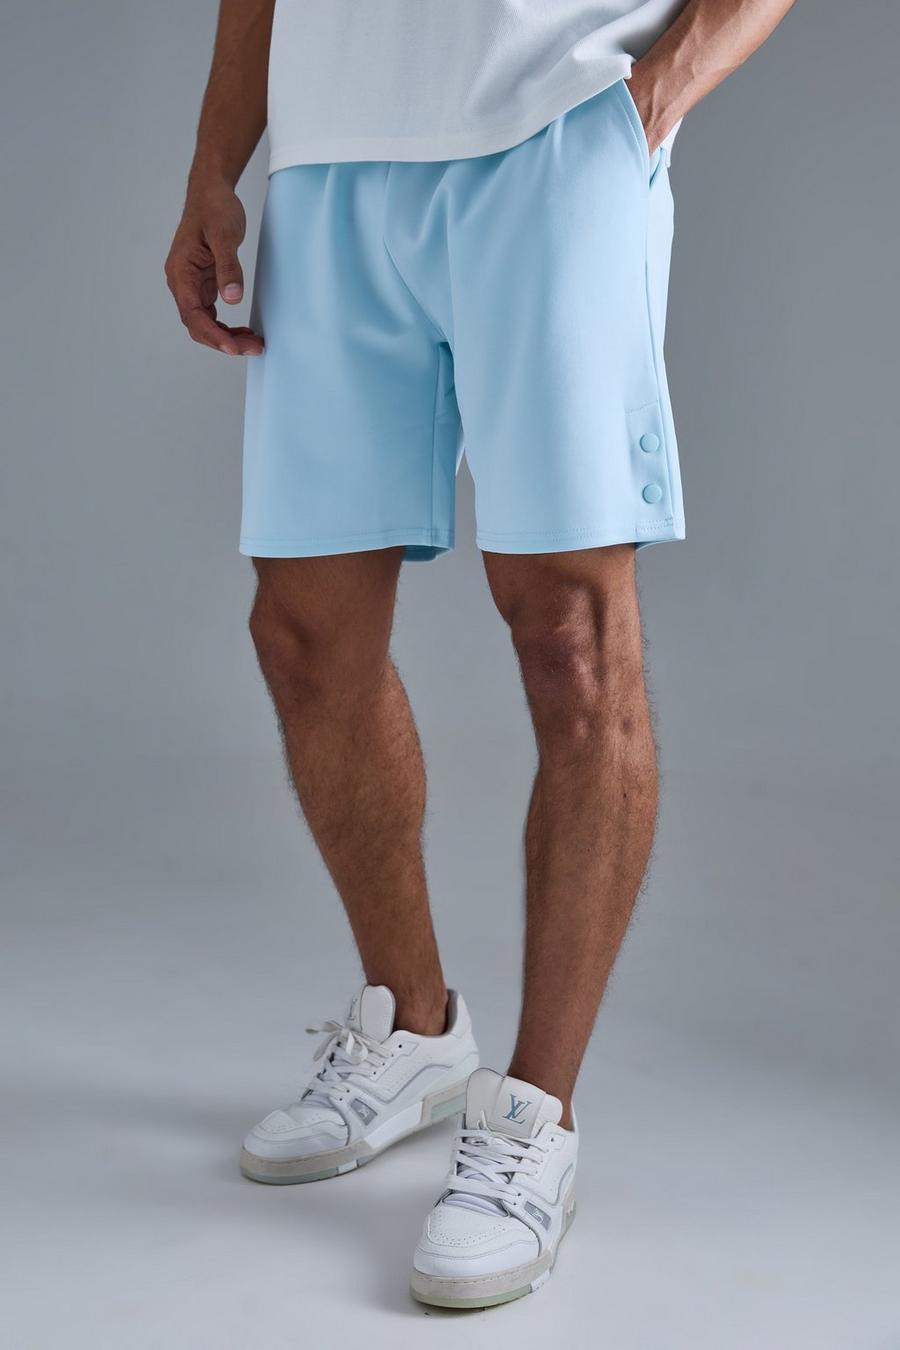 Lockere Scuba Shorts mit Druckknöpfen, Light blue